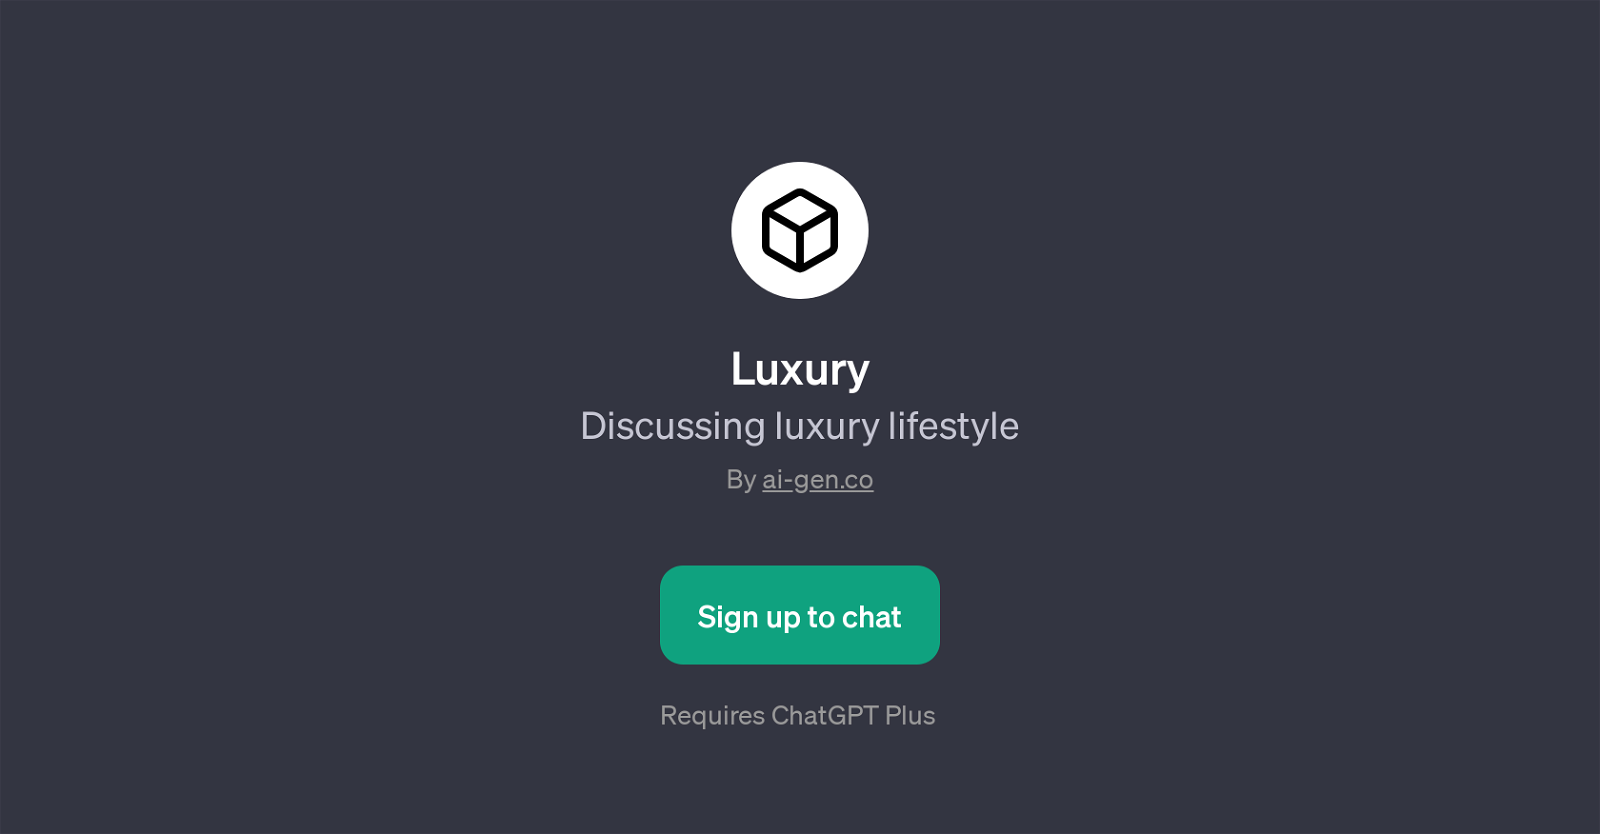 Luxury website